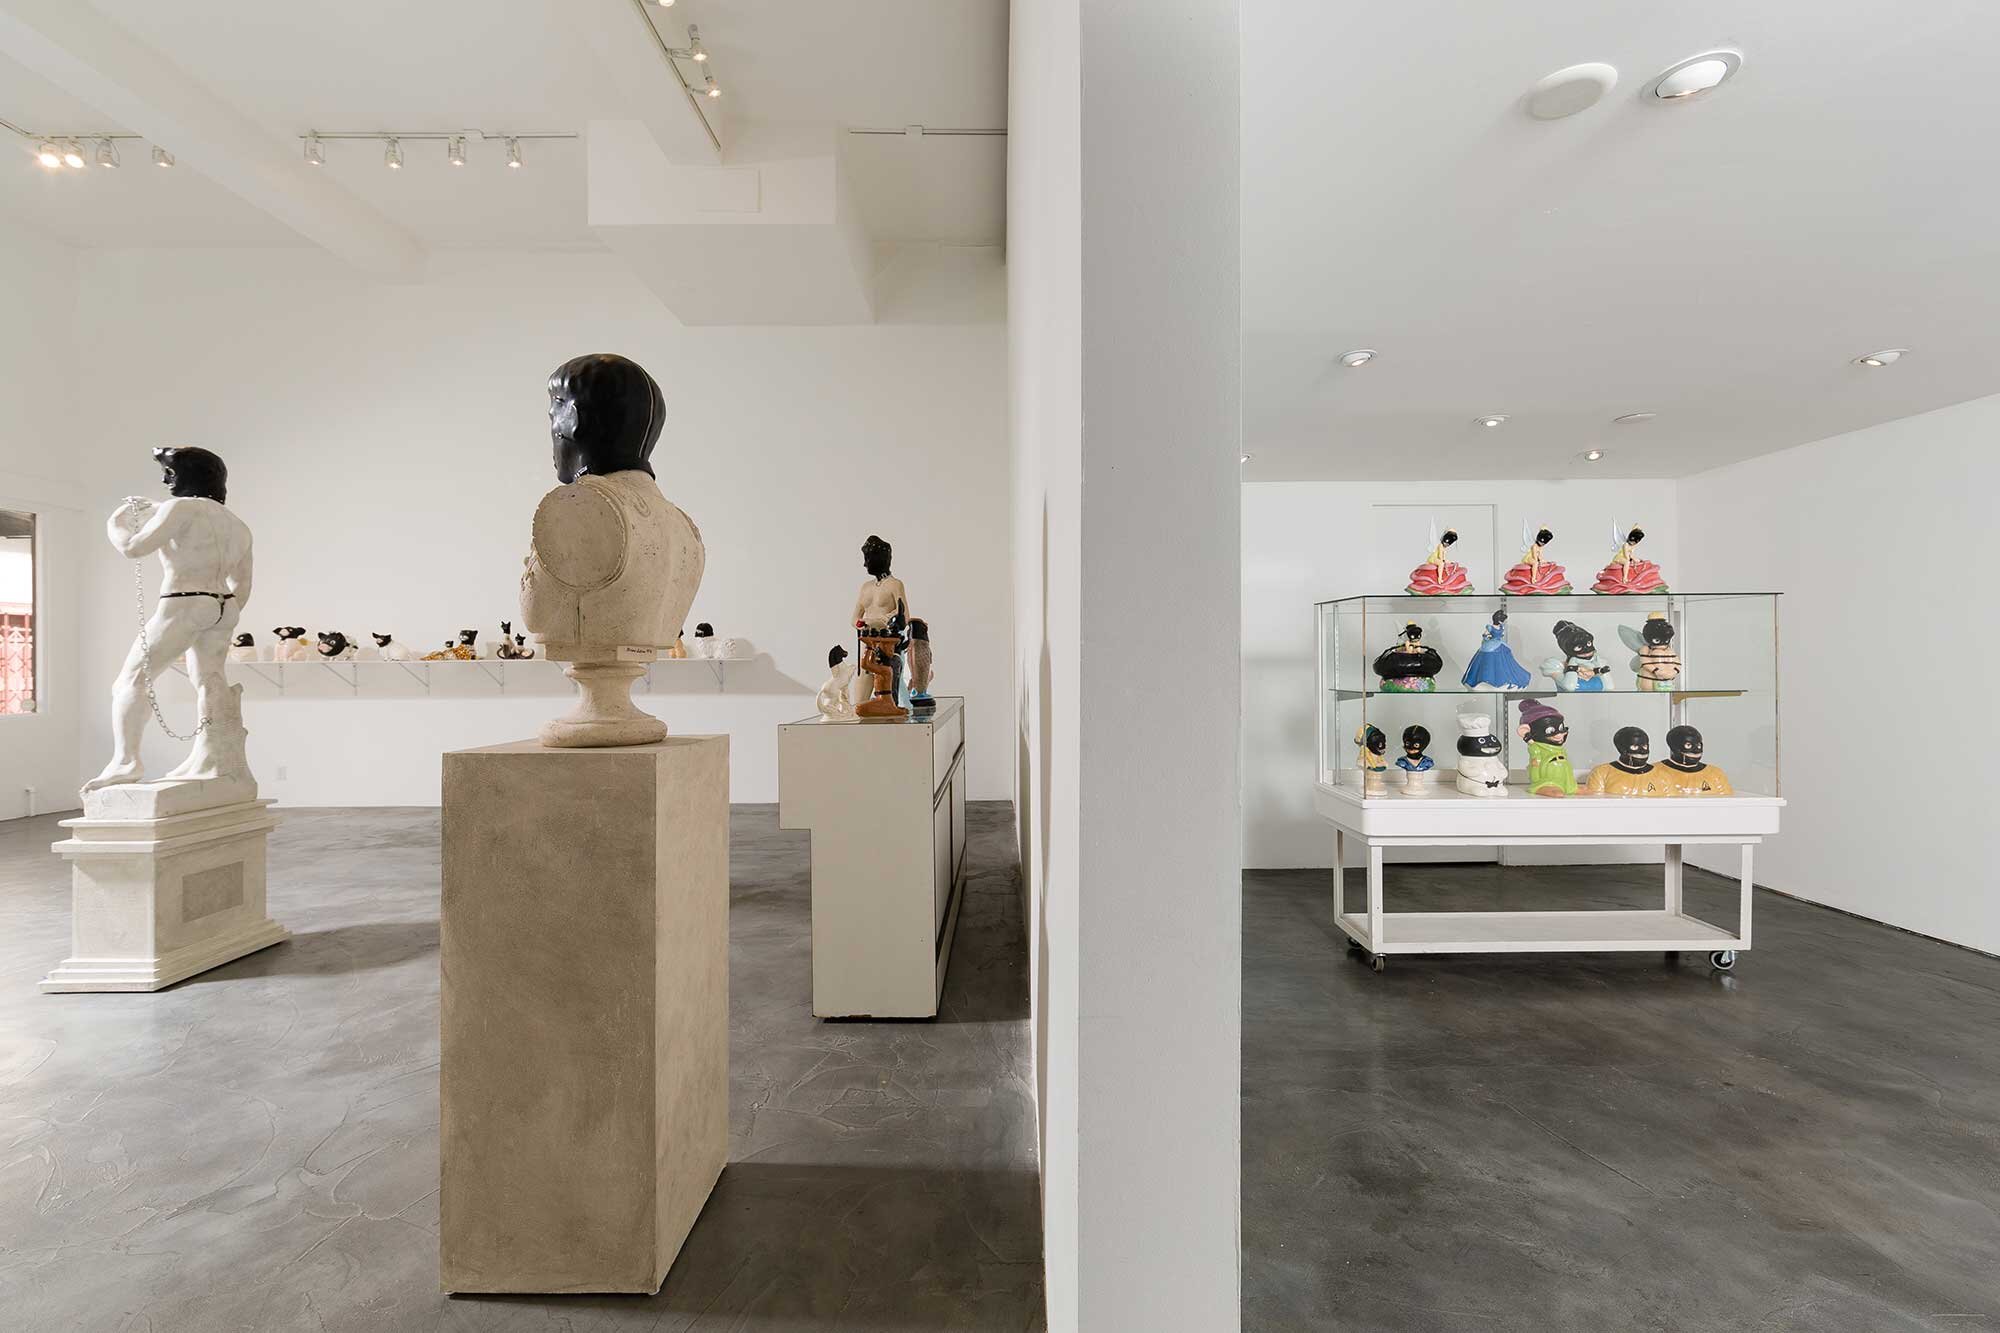  Richard Ankrom,  The Curio Shop , Installation at CJG, June 2015 